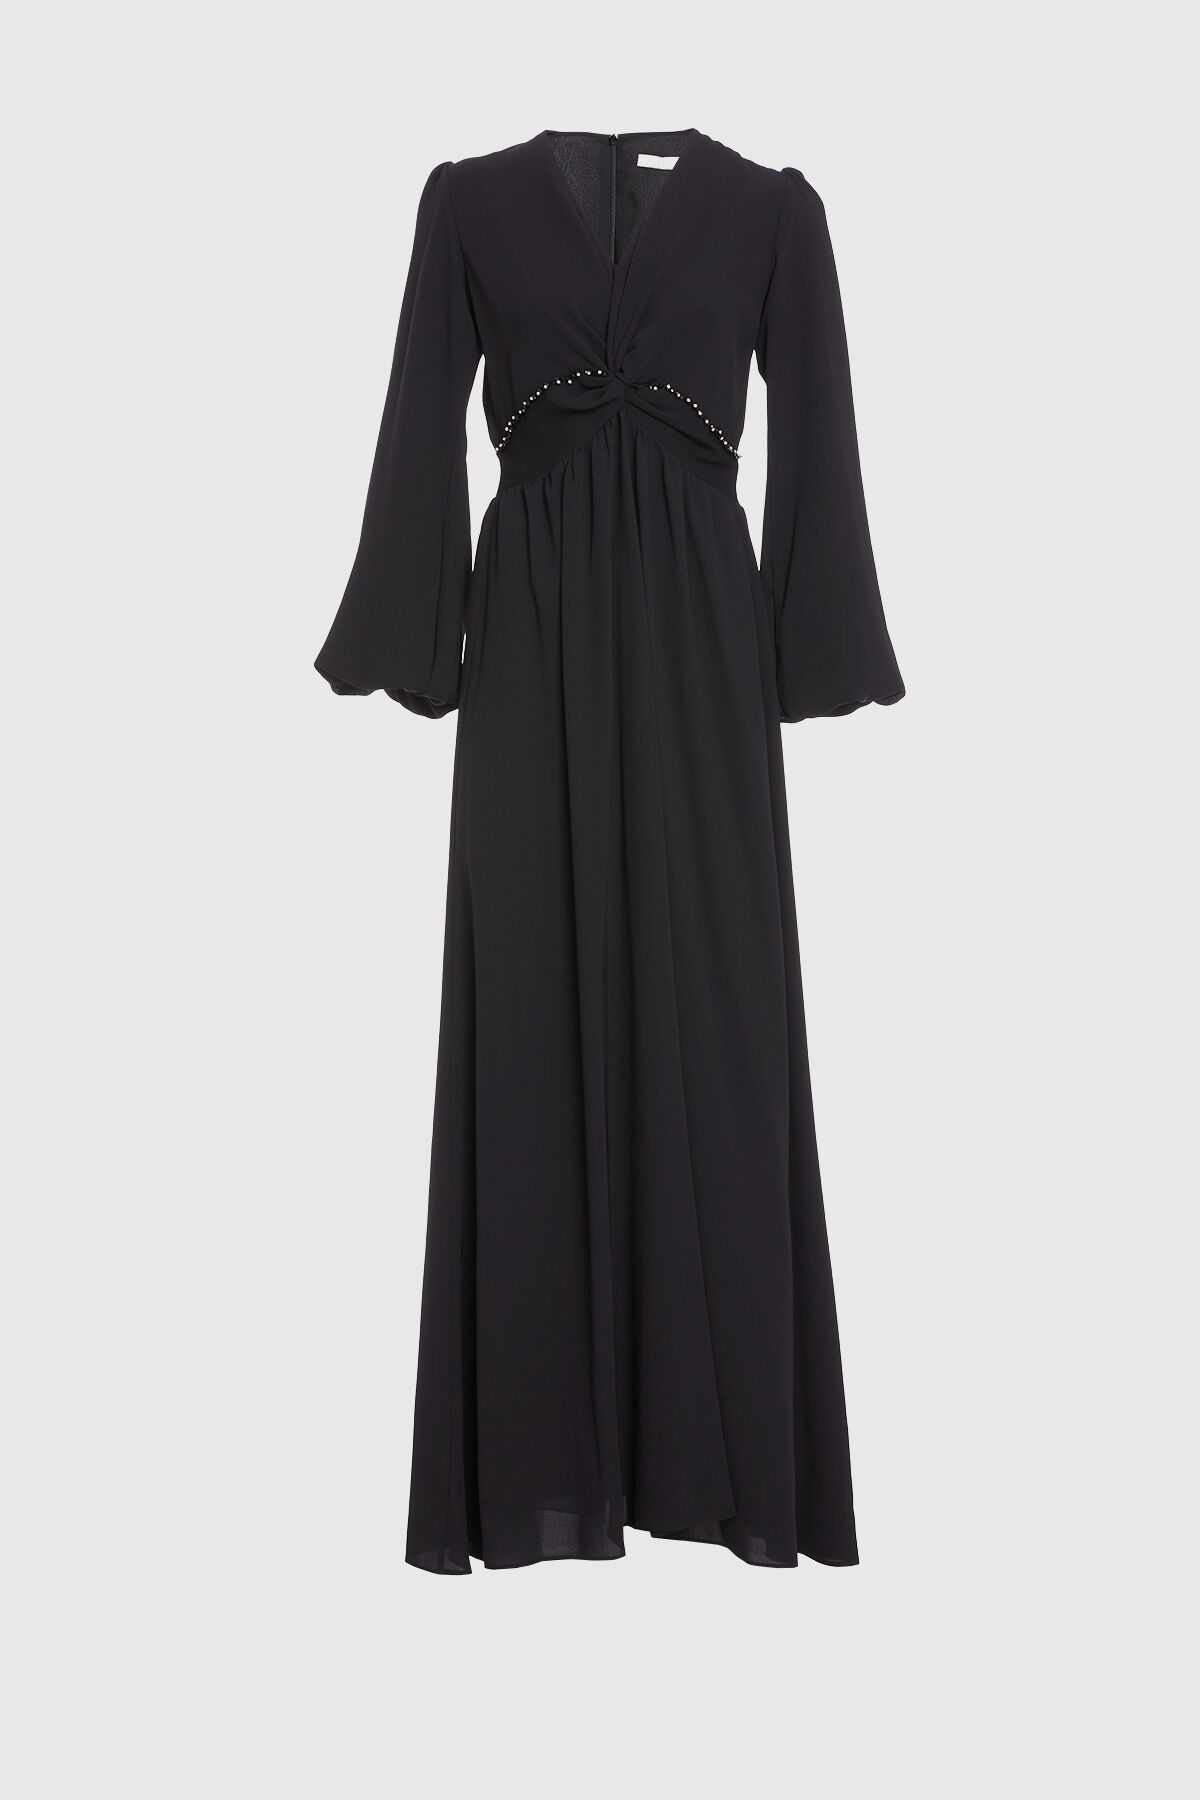  GIZIA - V Neck Long Black Dress